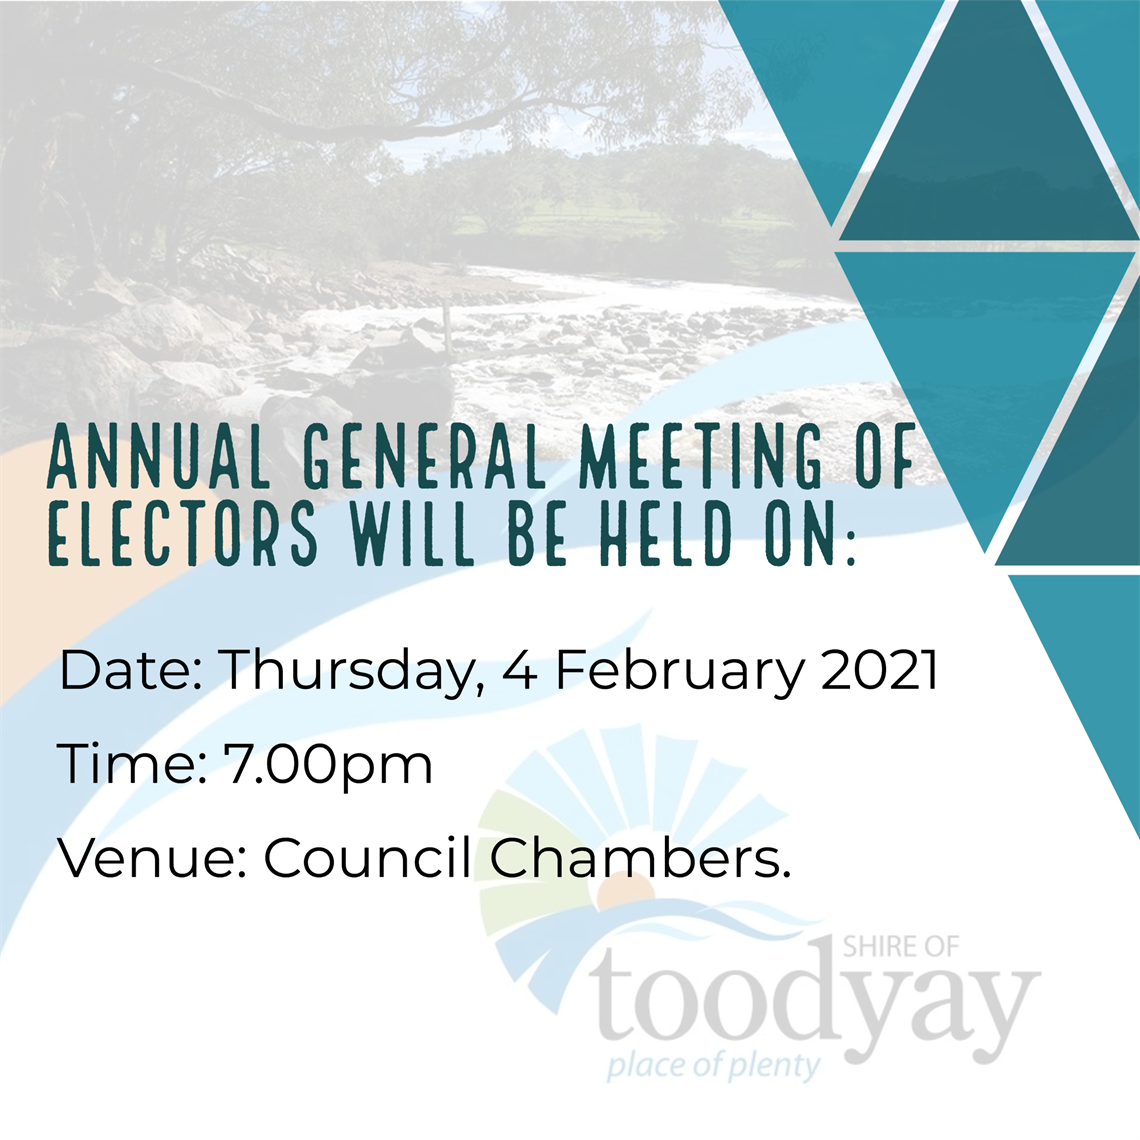 ANNUAL GENERAL MEETING OF ELECTORS 2021